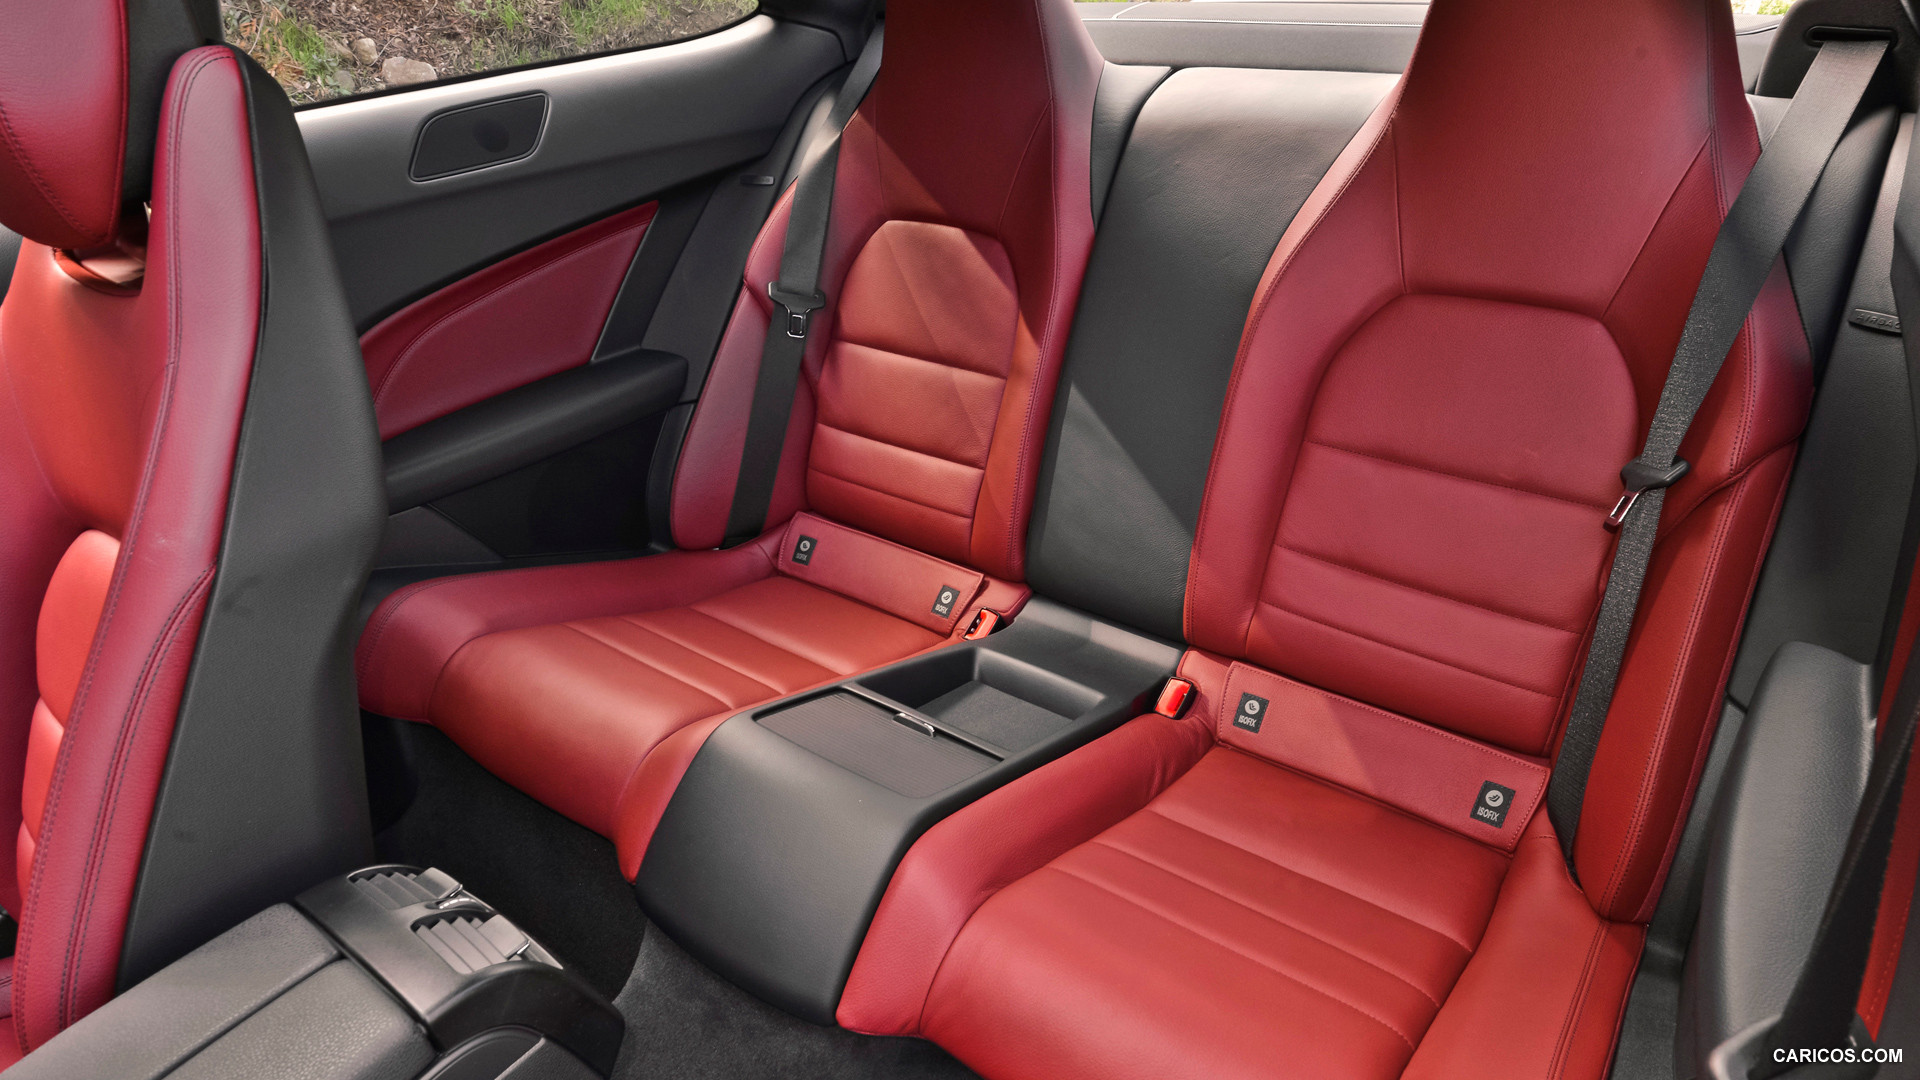 2013 Mercedes Benz C350 Coupe Interior Rear Seats Hd